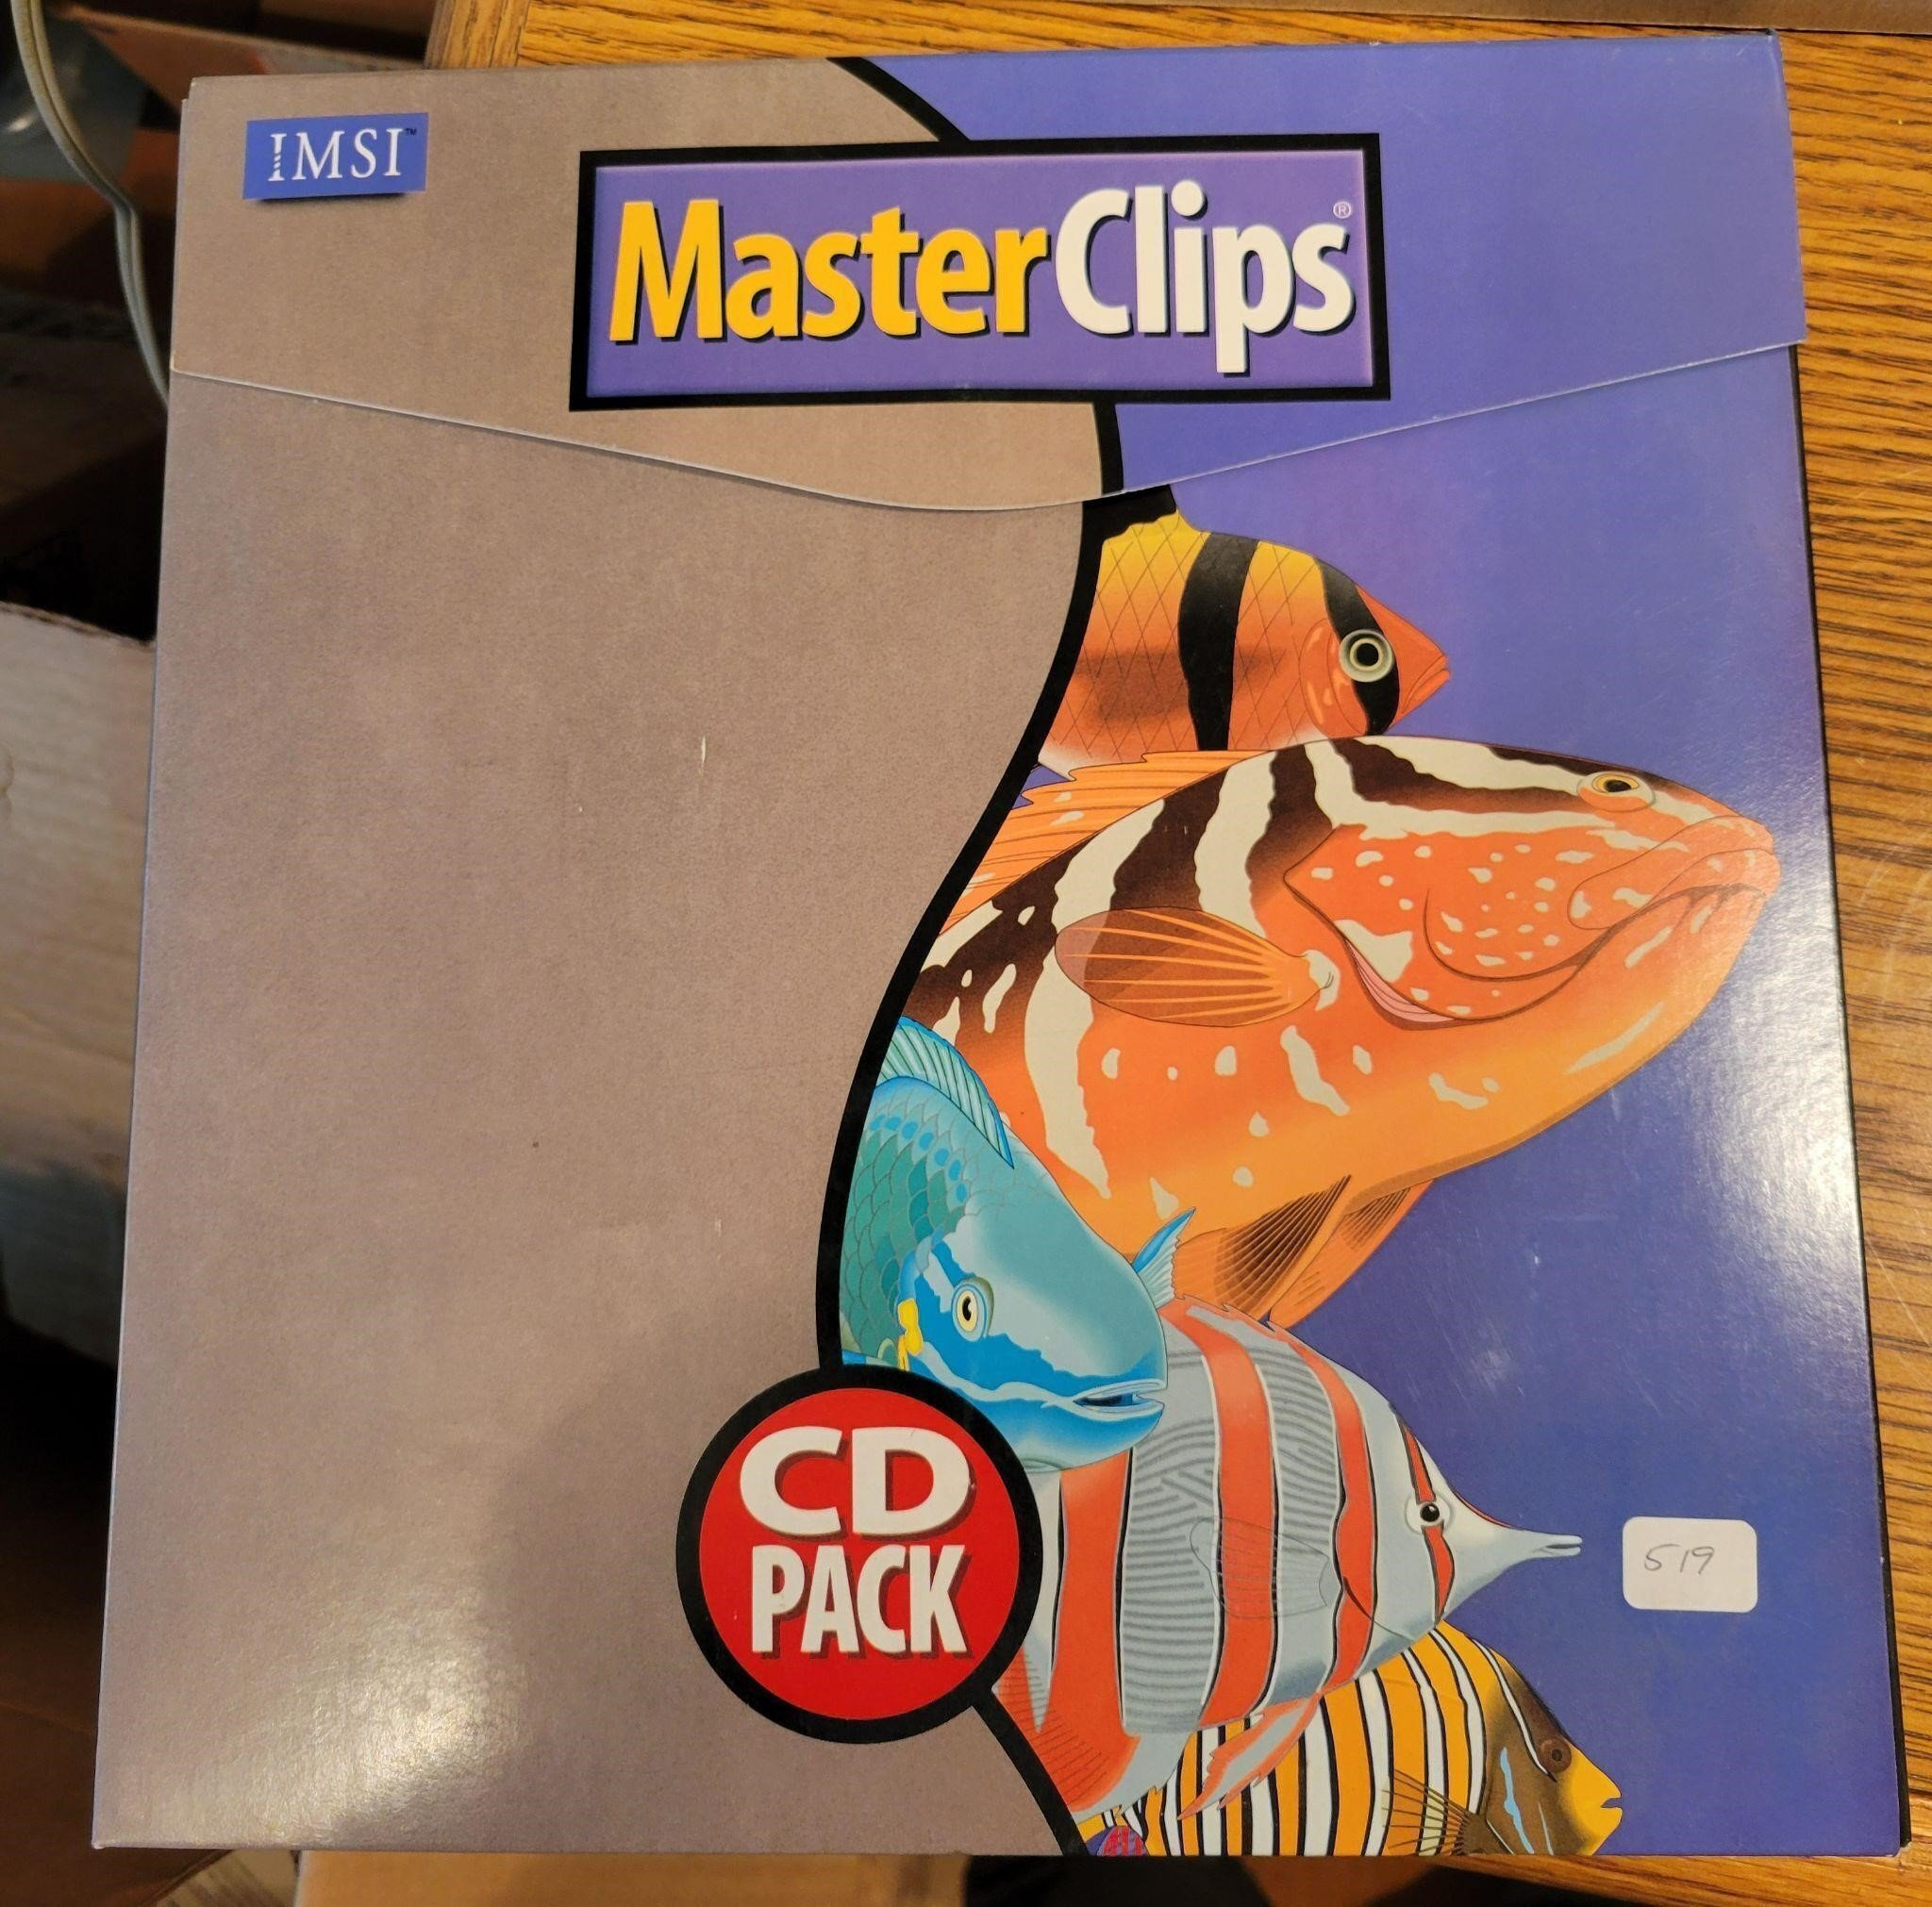 IMSI Master Clips CD Pack